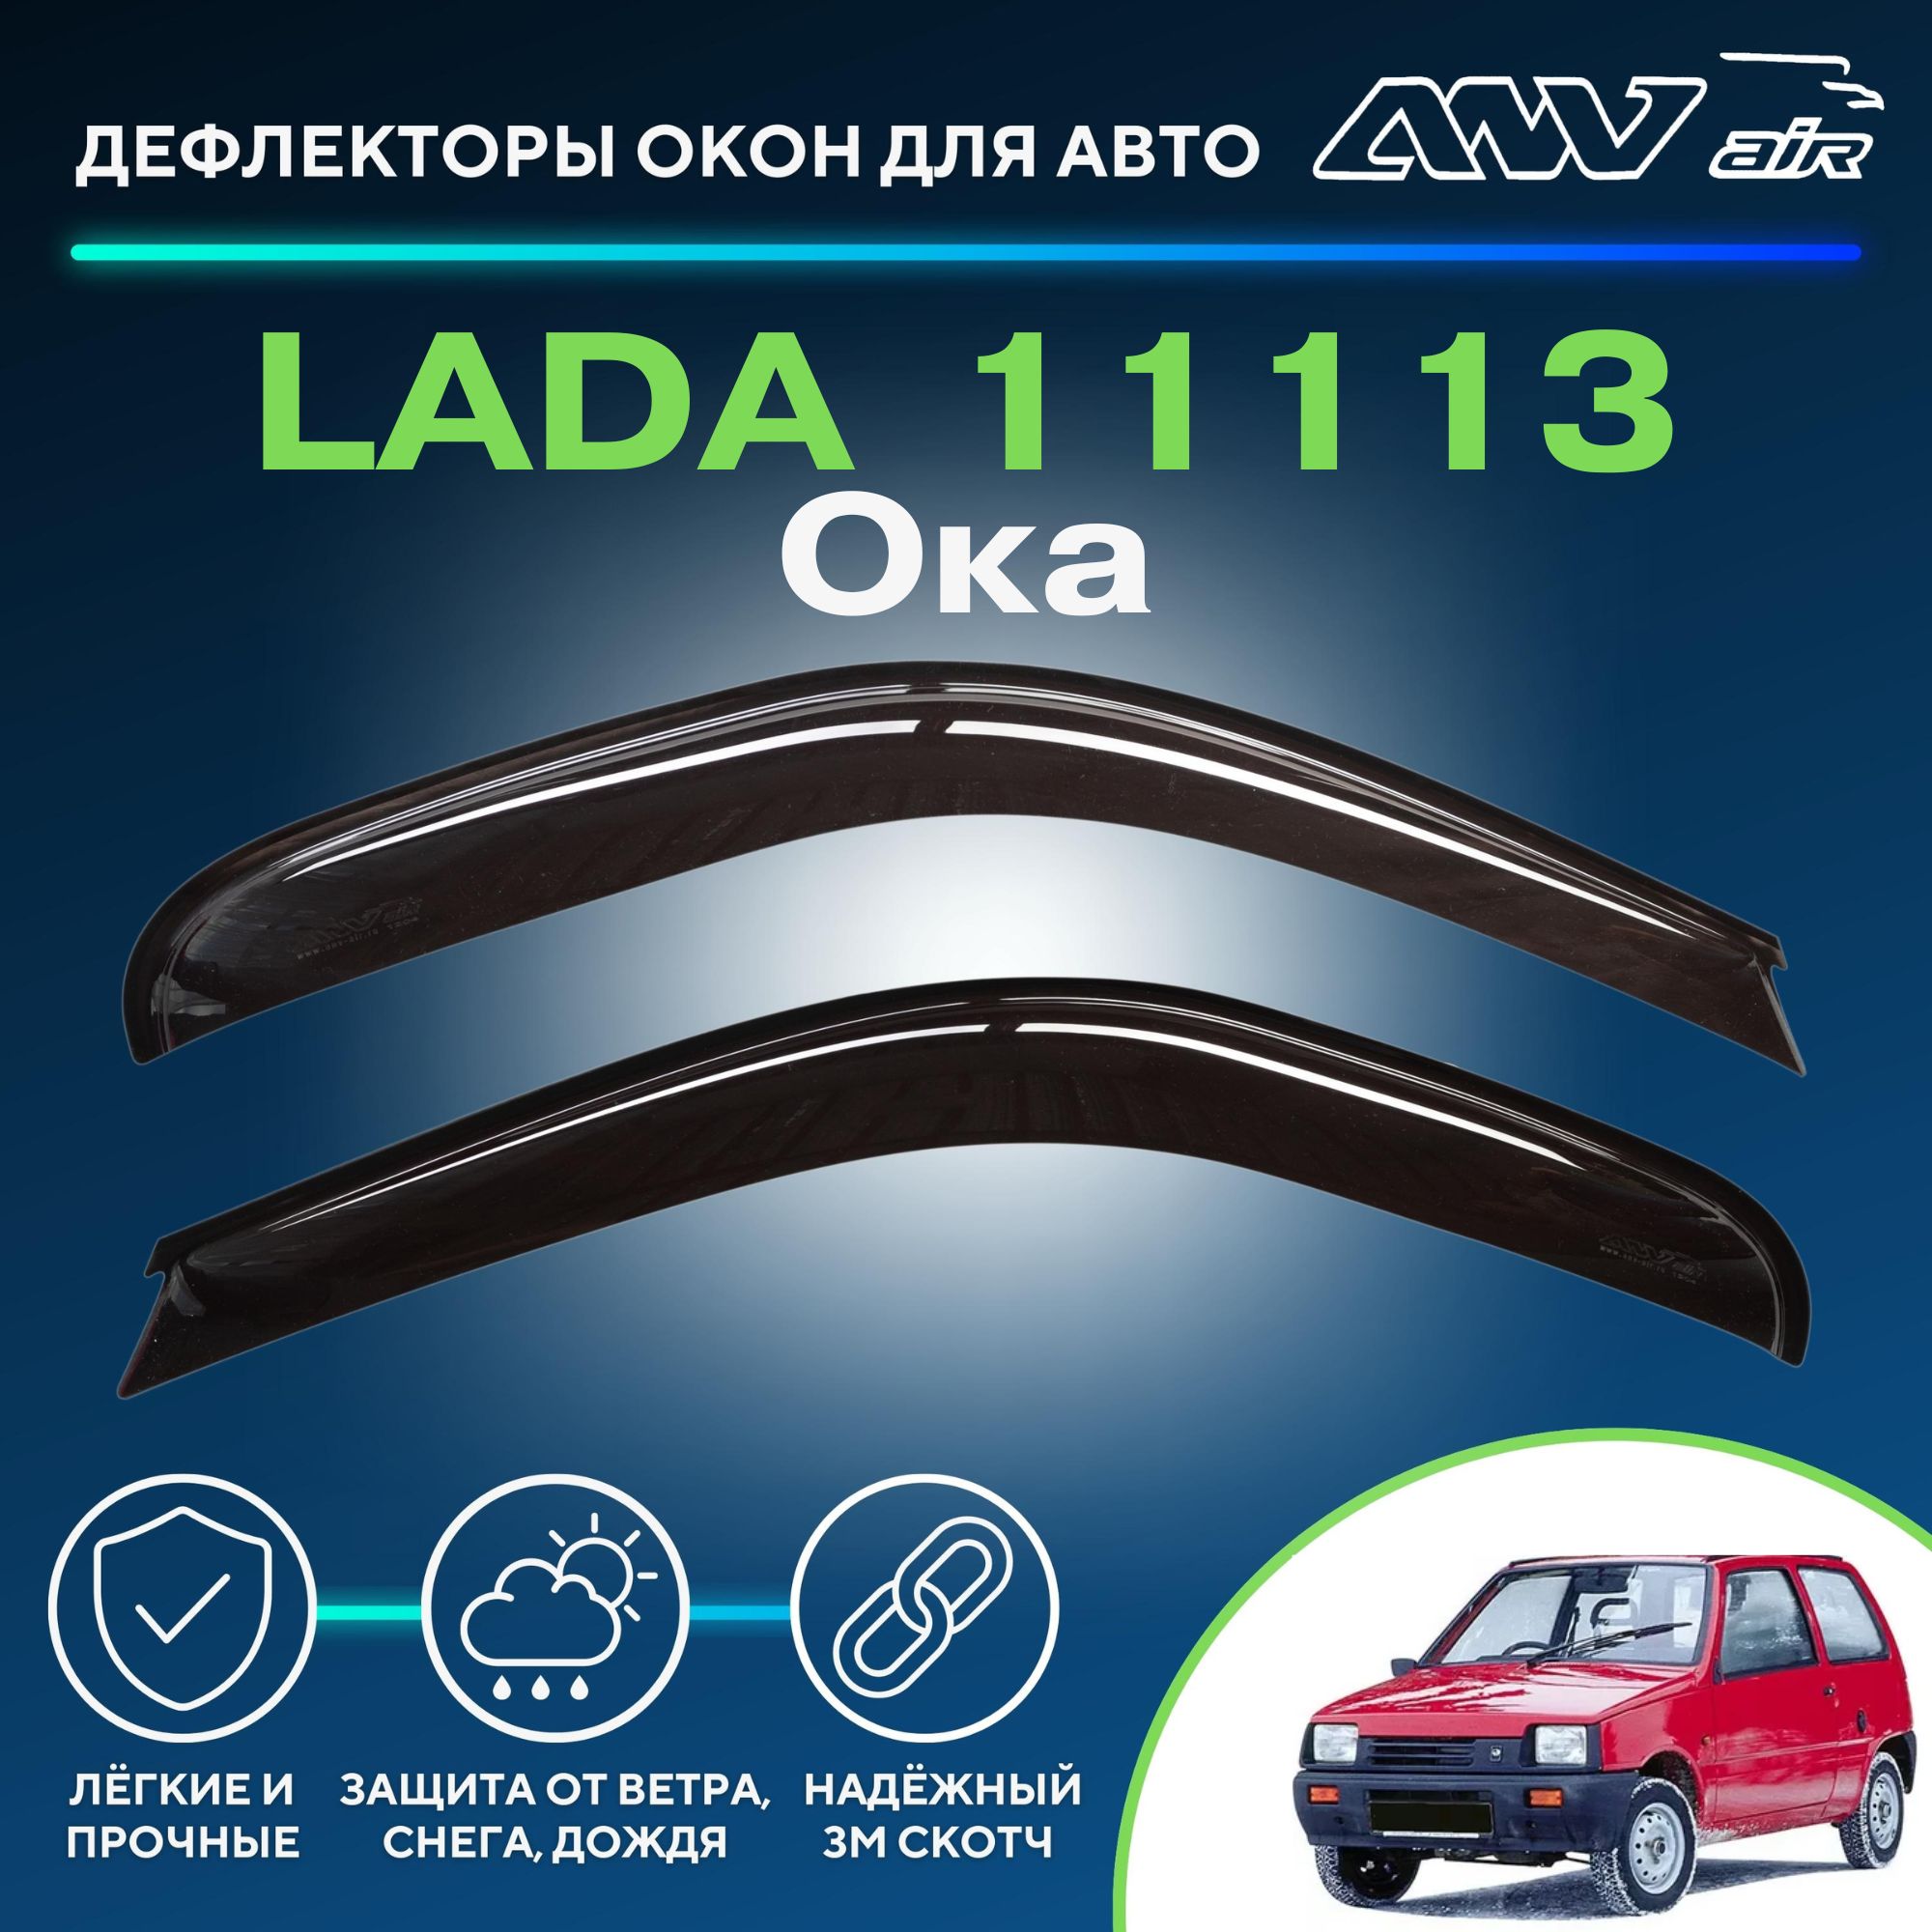 Воздухозаборник на капот ВАЗ (Lada) ОКА (1111) Evo Style